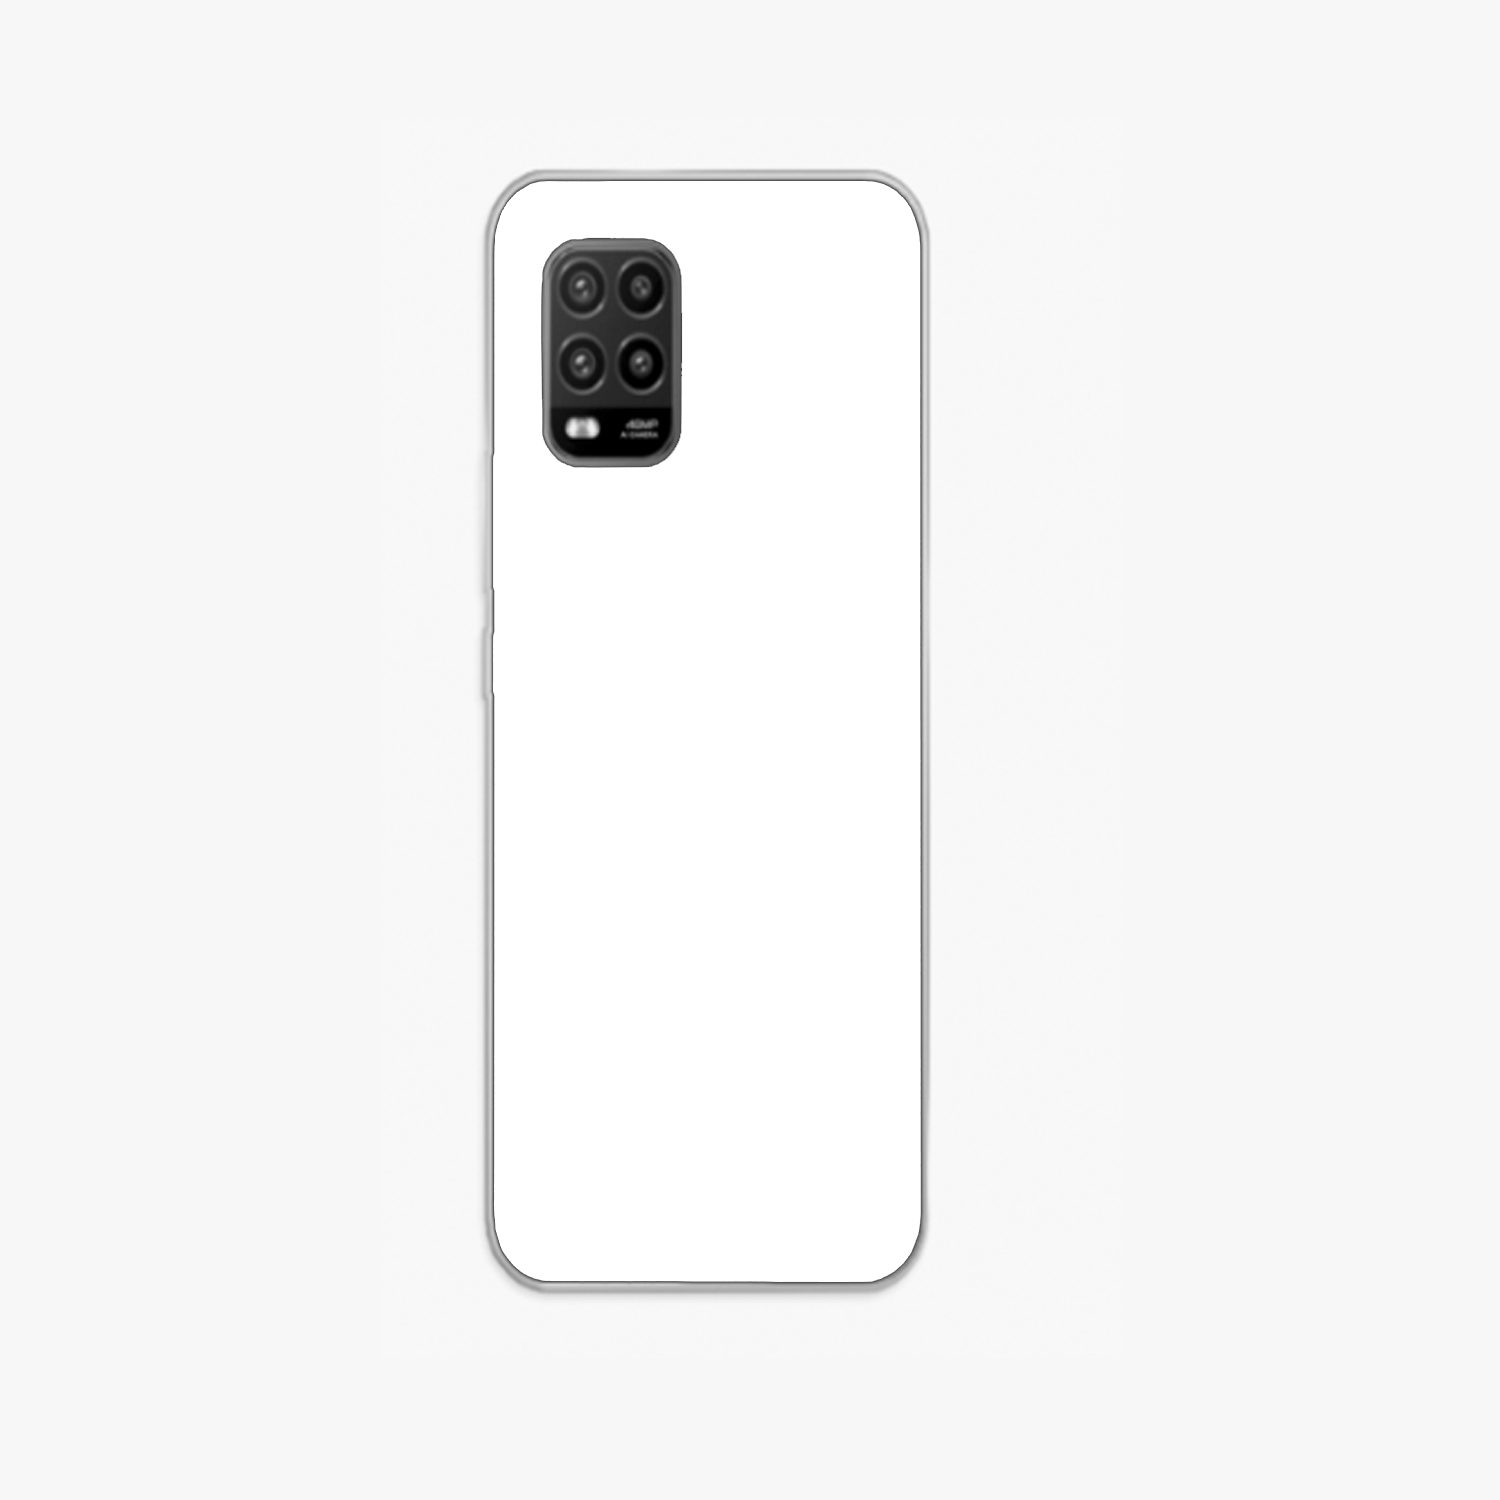 Personaliza tu Funda [Xiaomi Mi 10T Lite 5G] de Silicona Flexible  Transparente Carcasa Case Cover de Gel TPU para Smartphone